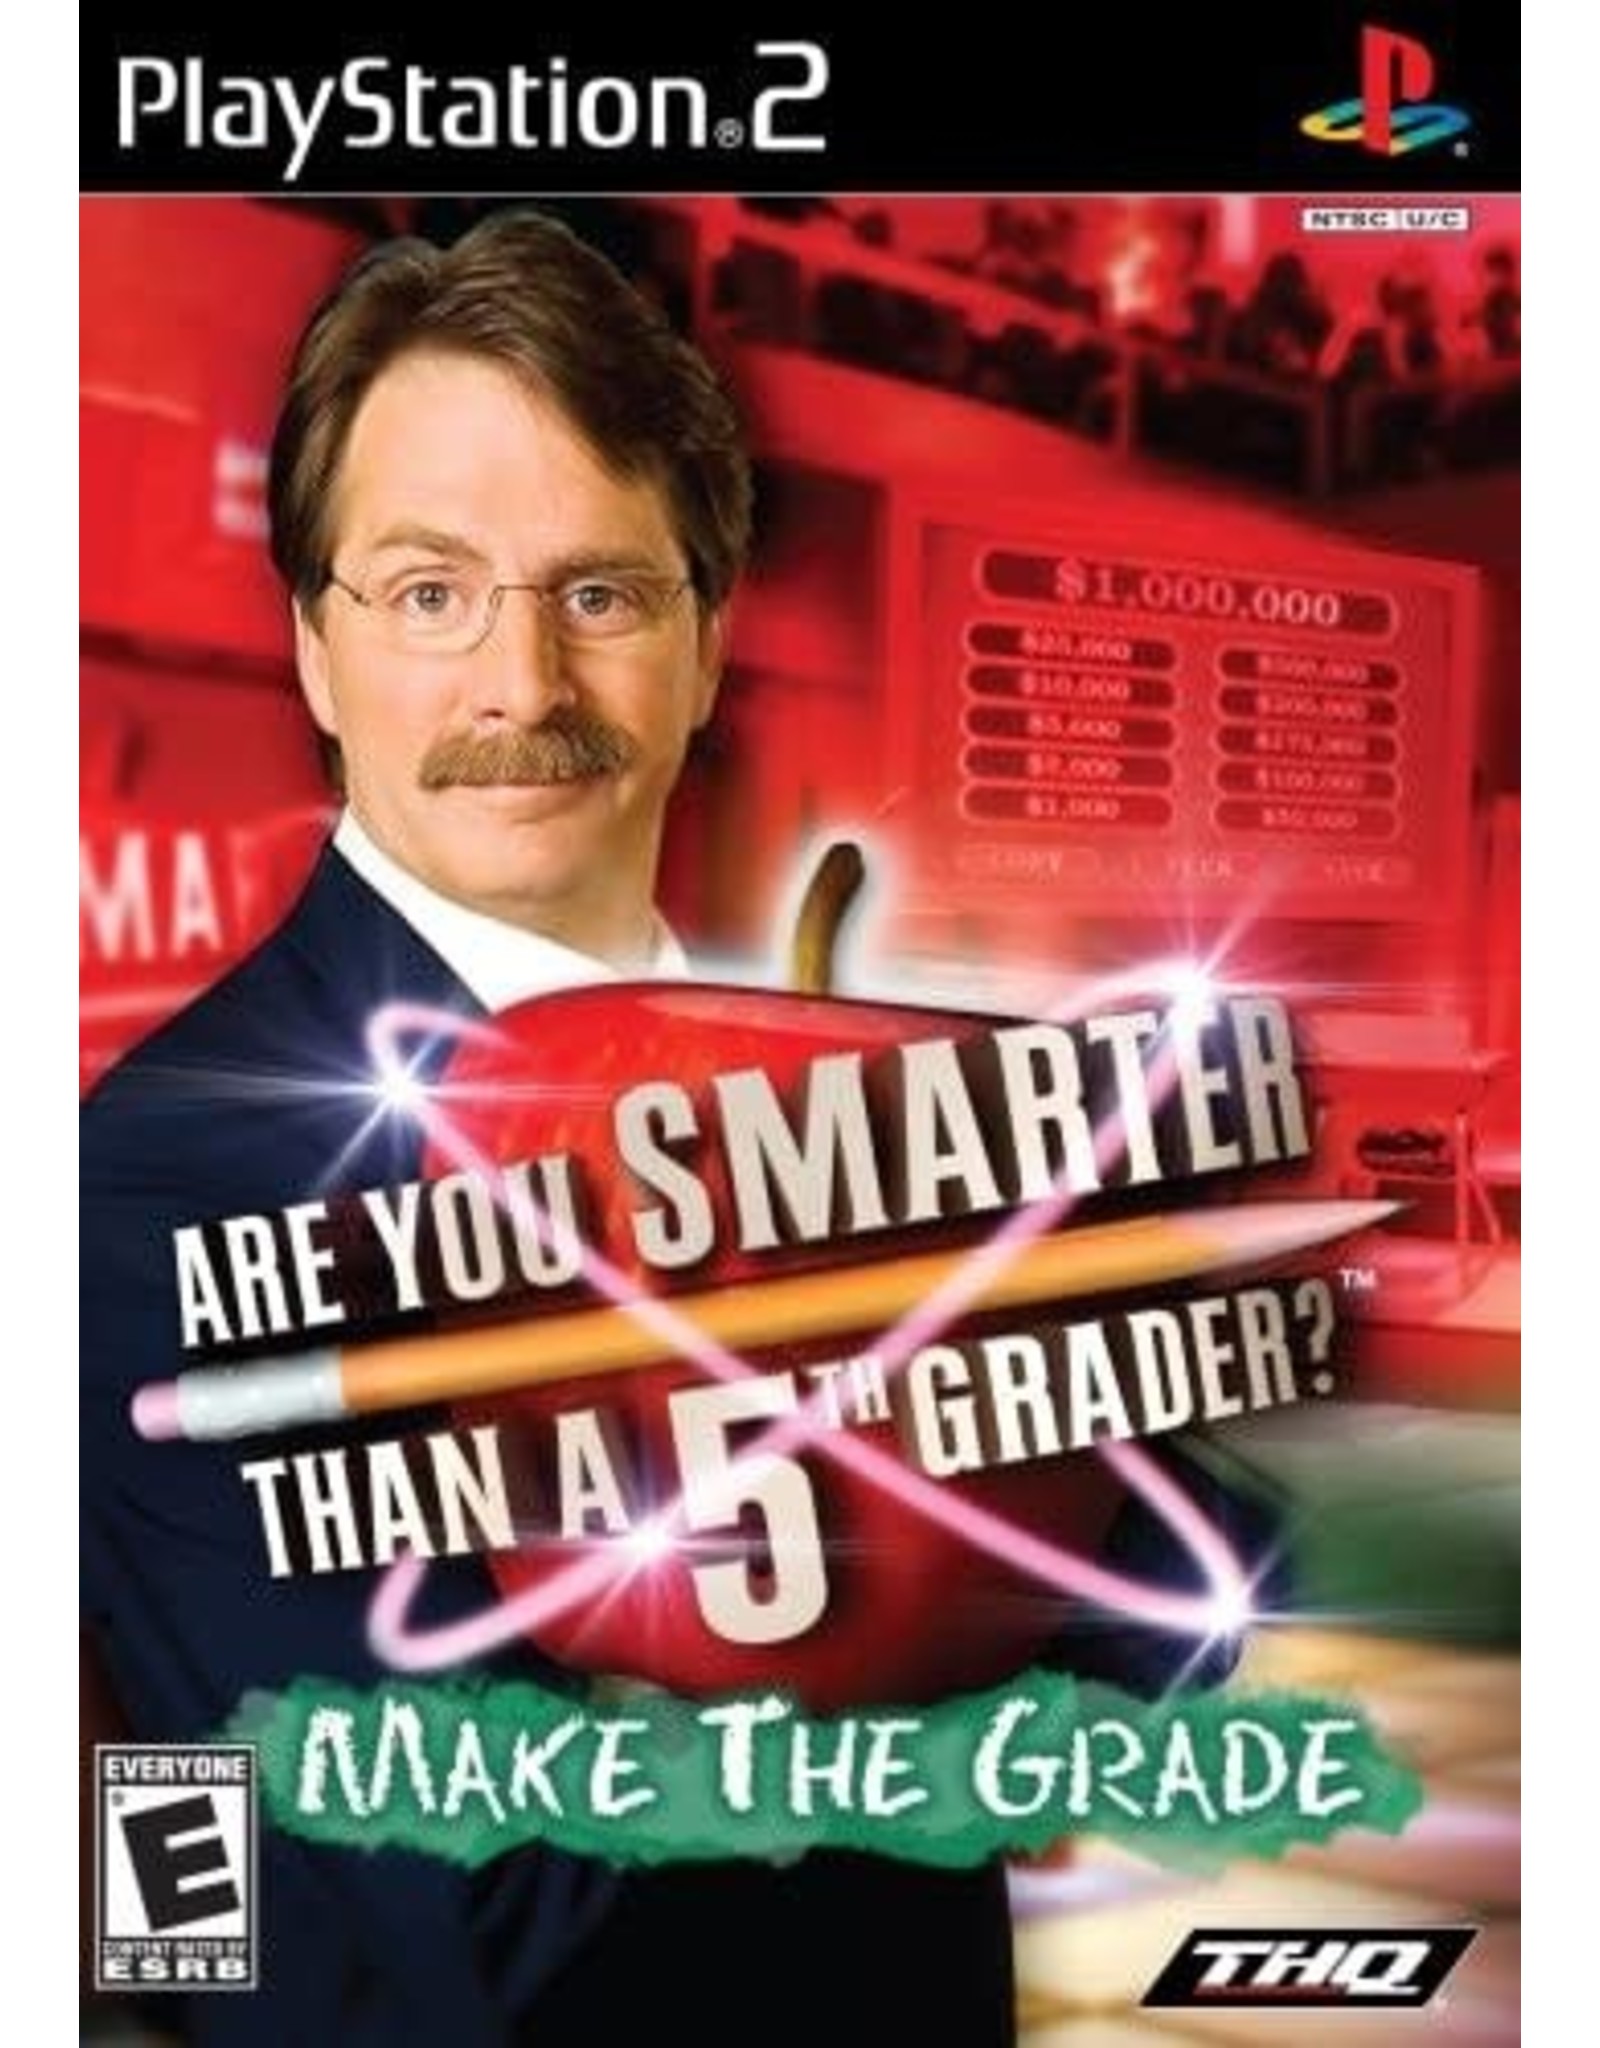 Playstation 2 Are You Smarter Than A 5th Grader? Make the Grade (CiB)